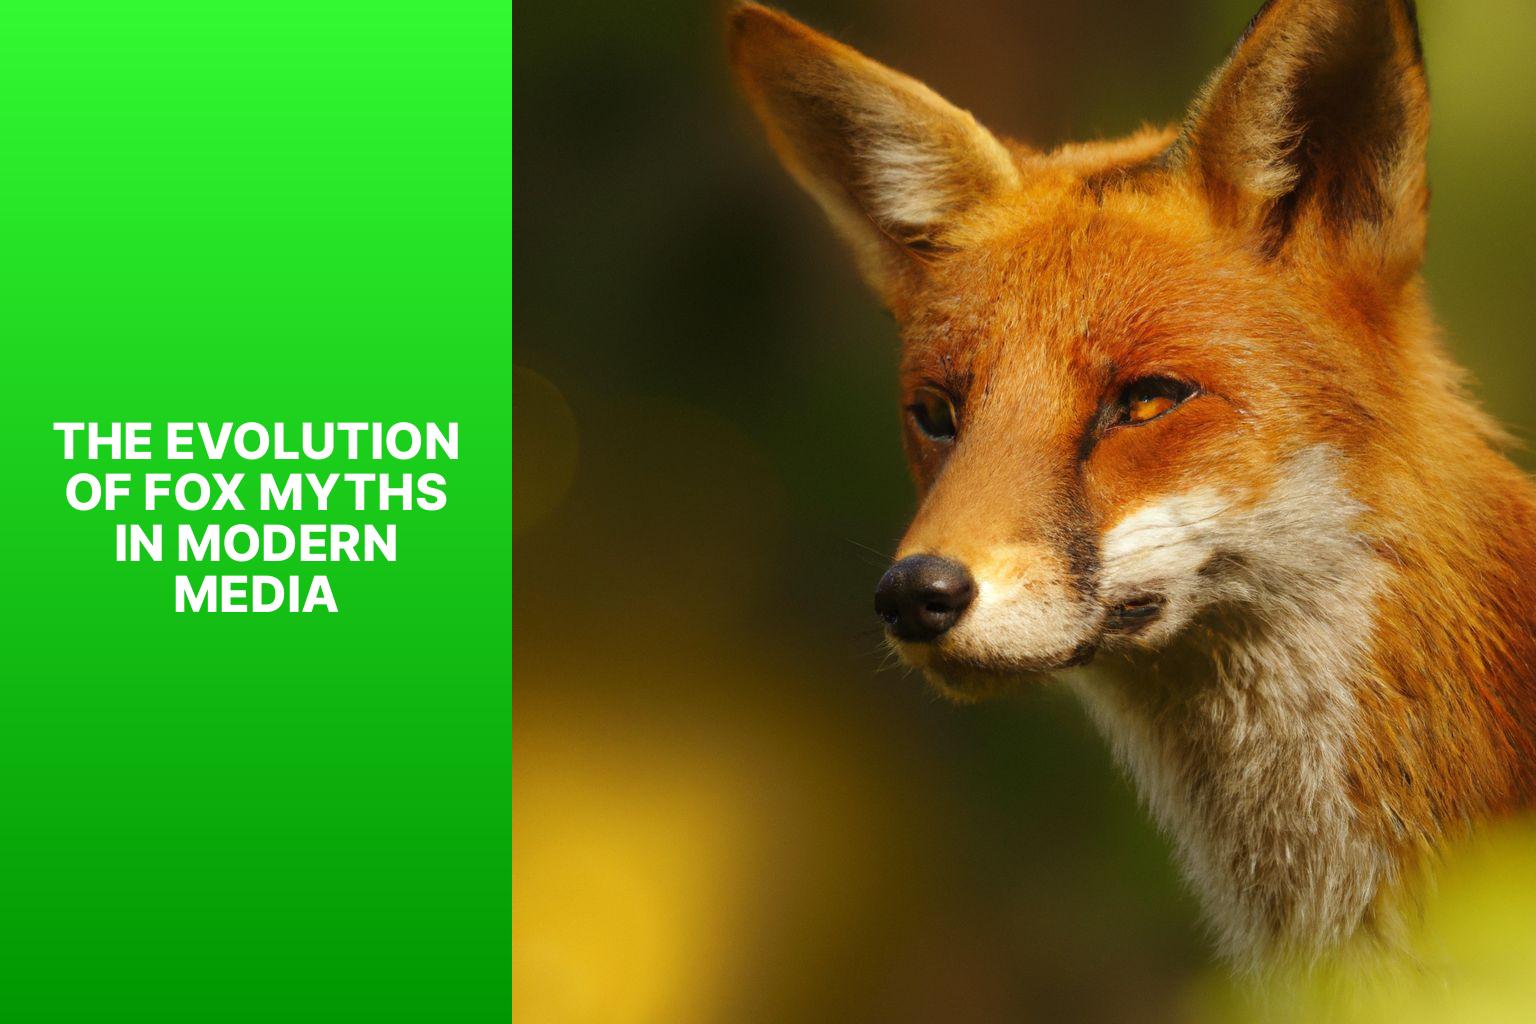 The Evolution of Fox Myths in Modern Media - Fox Myths in Folktales 